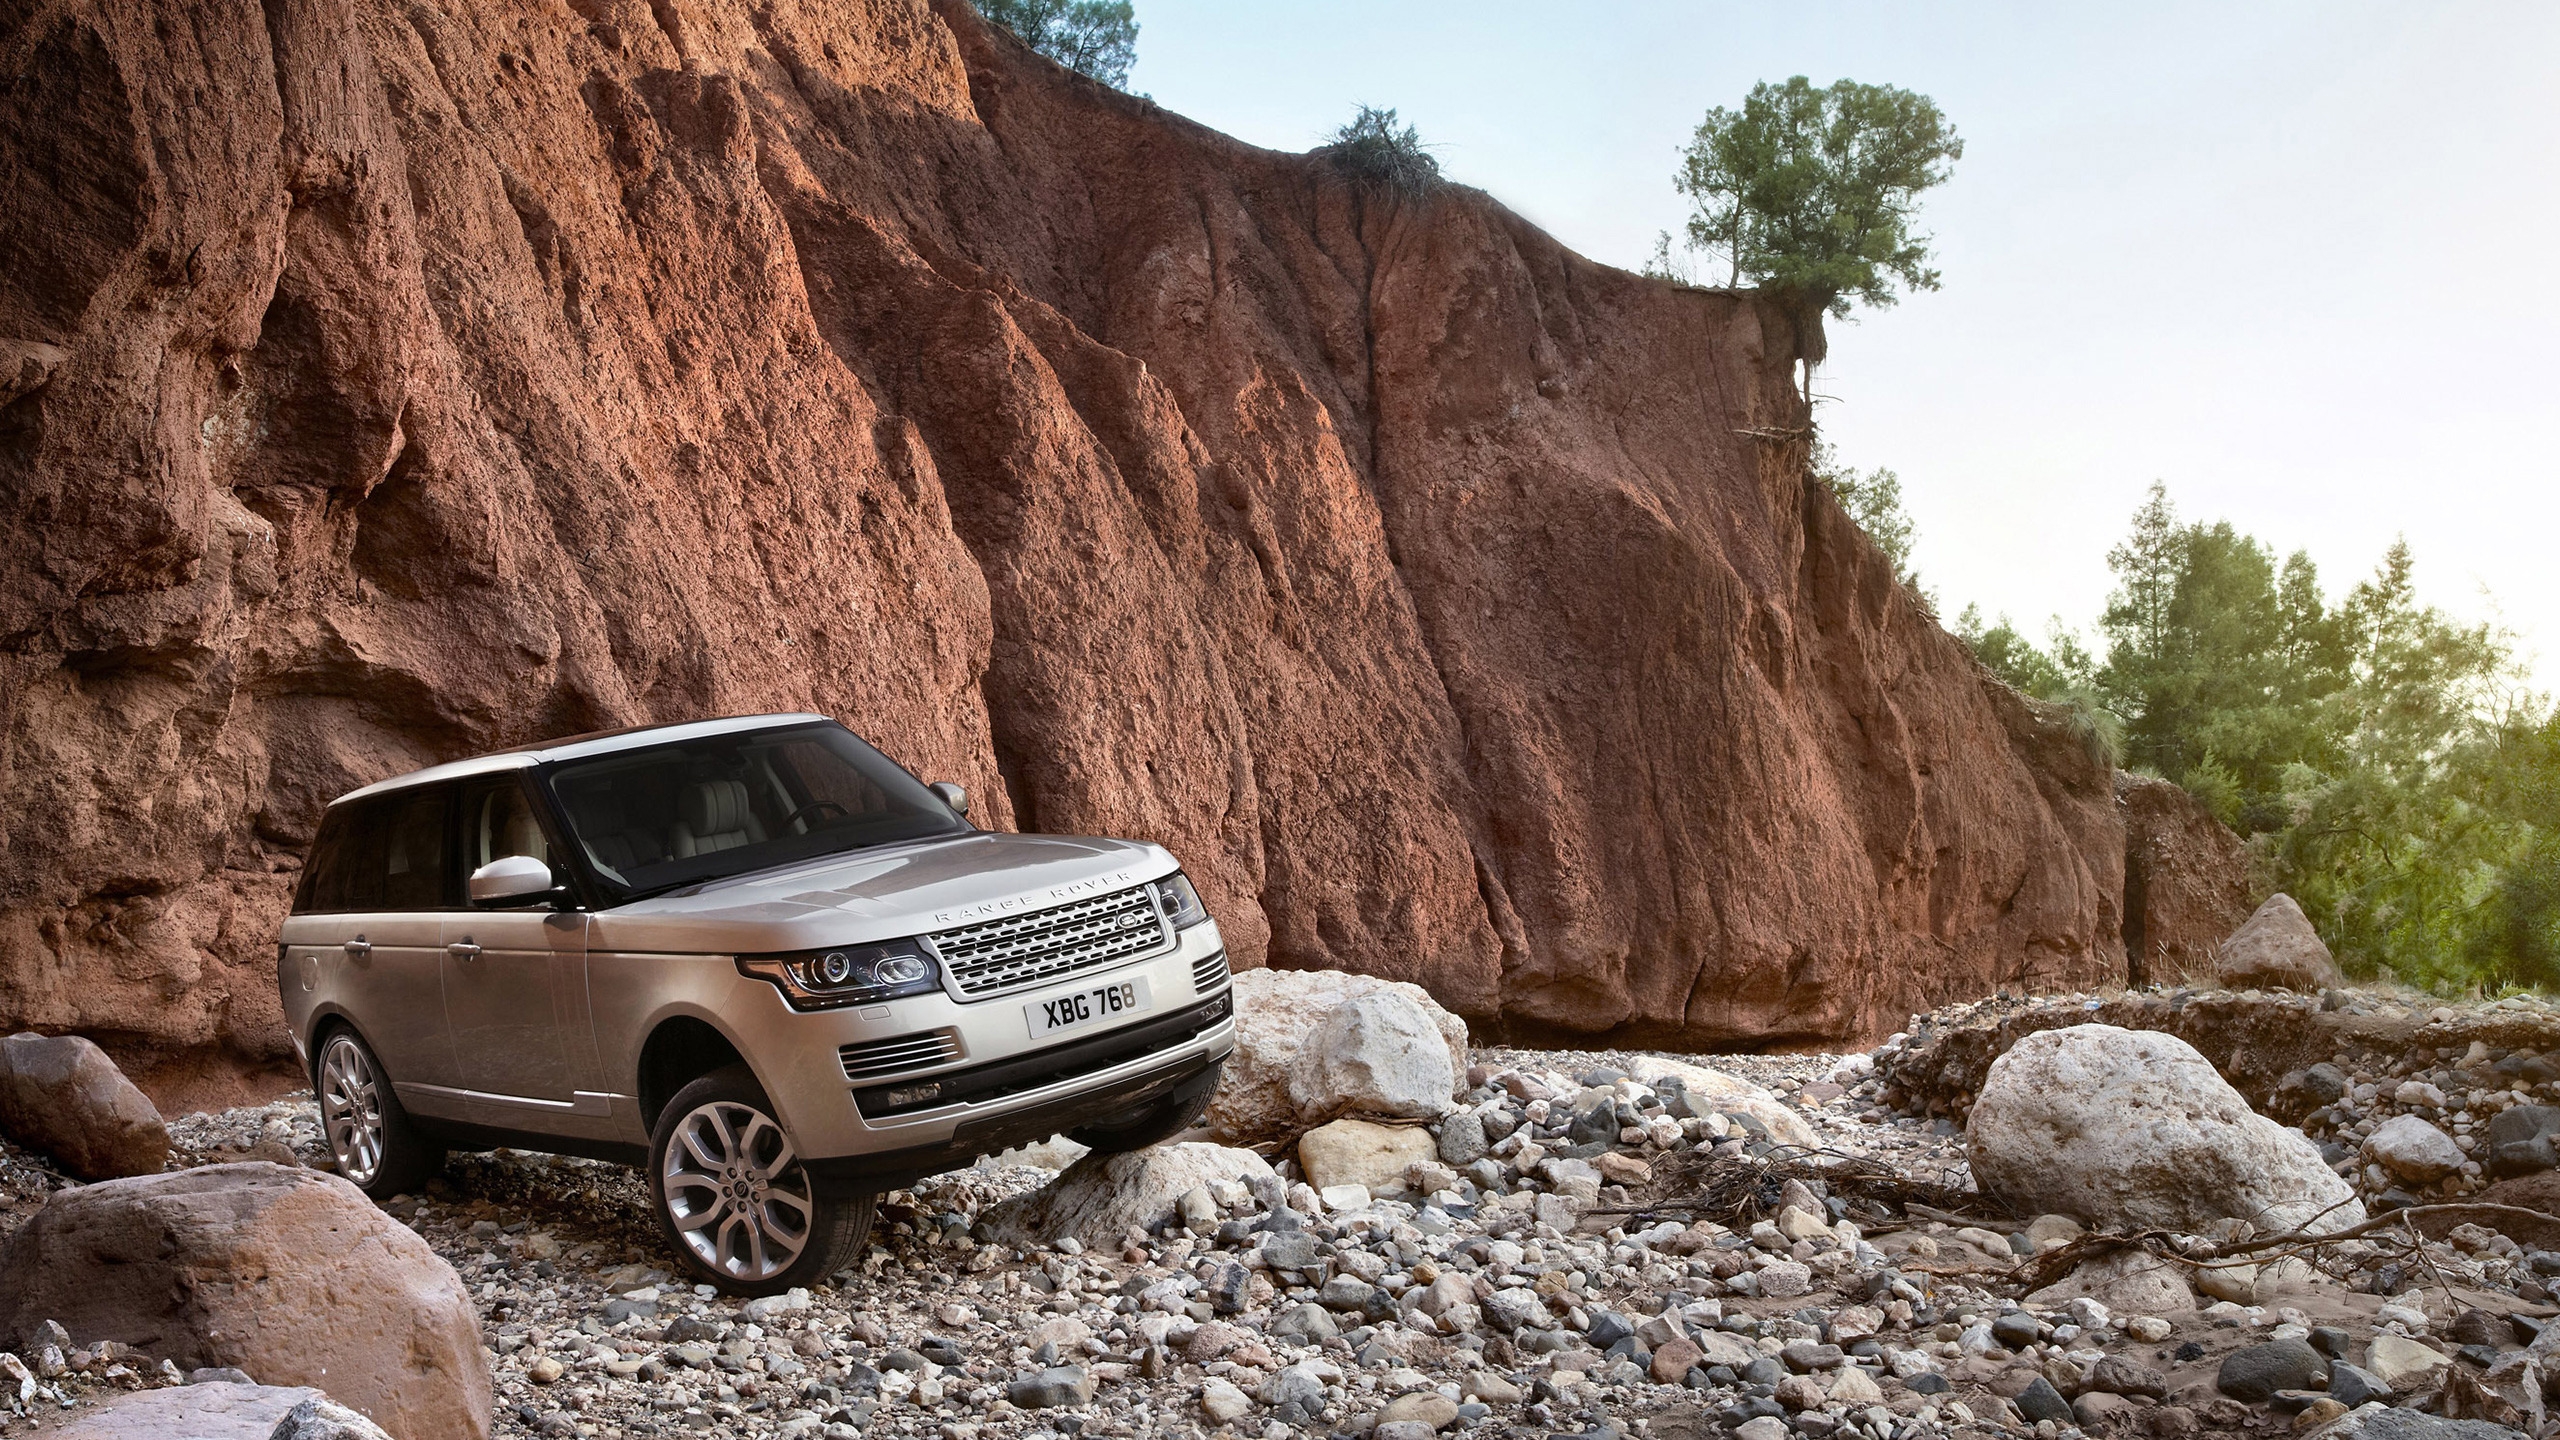 Range Rover on the Rocks for 2560x1440 HDTV resolution